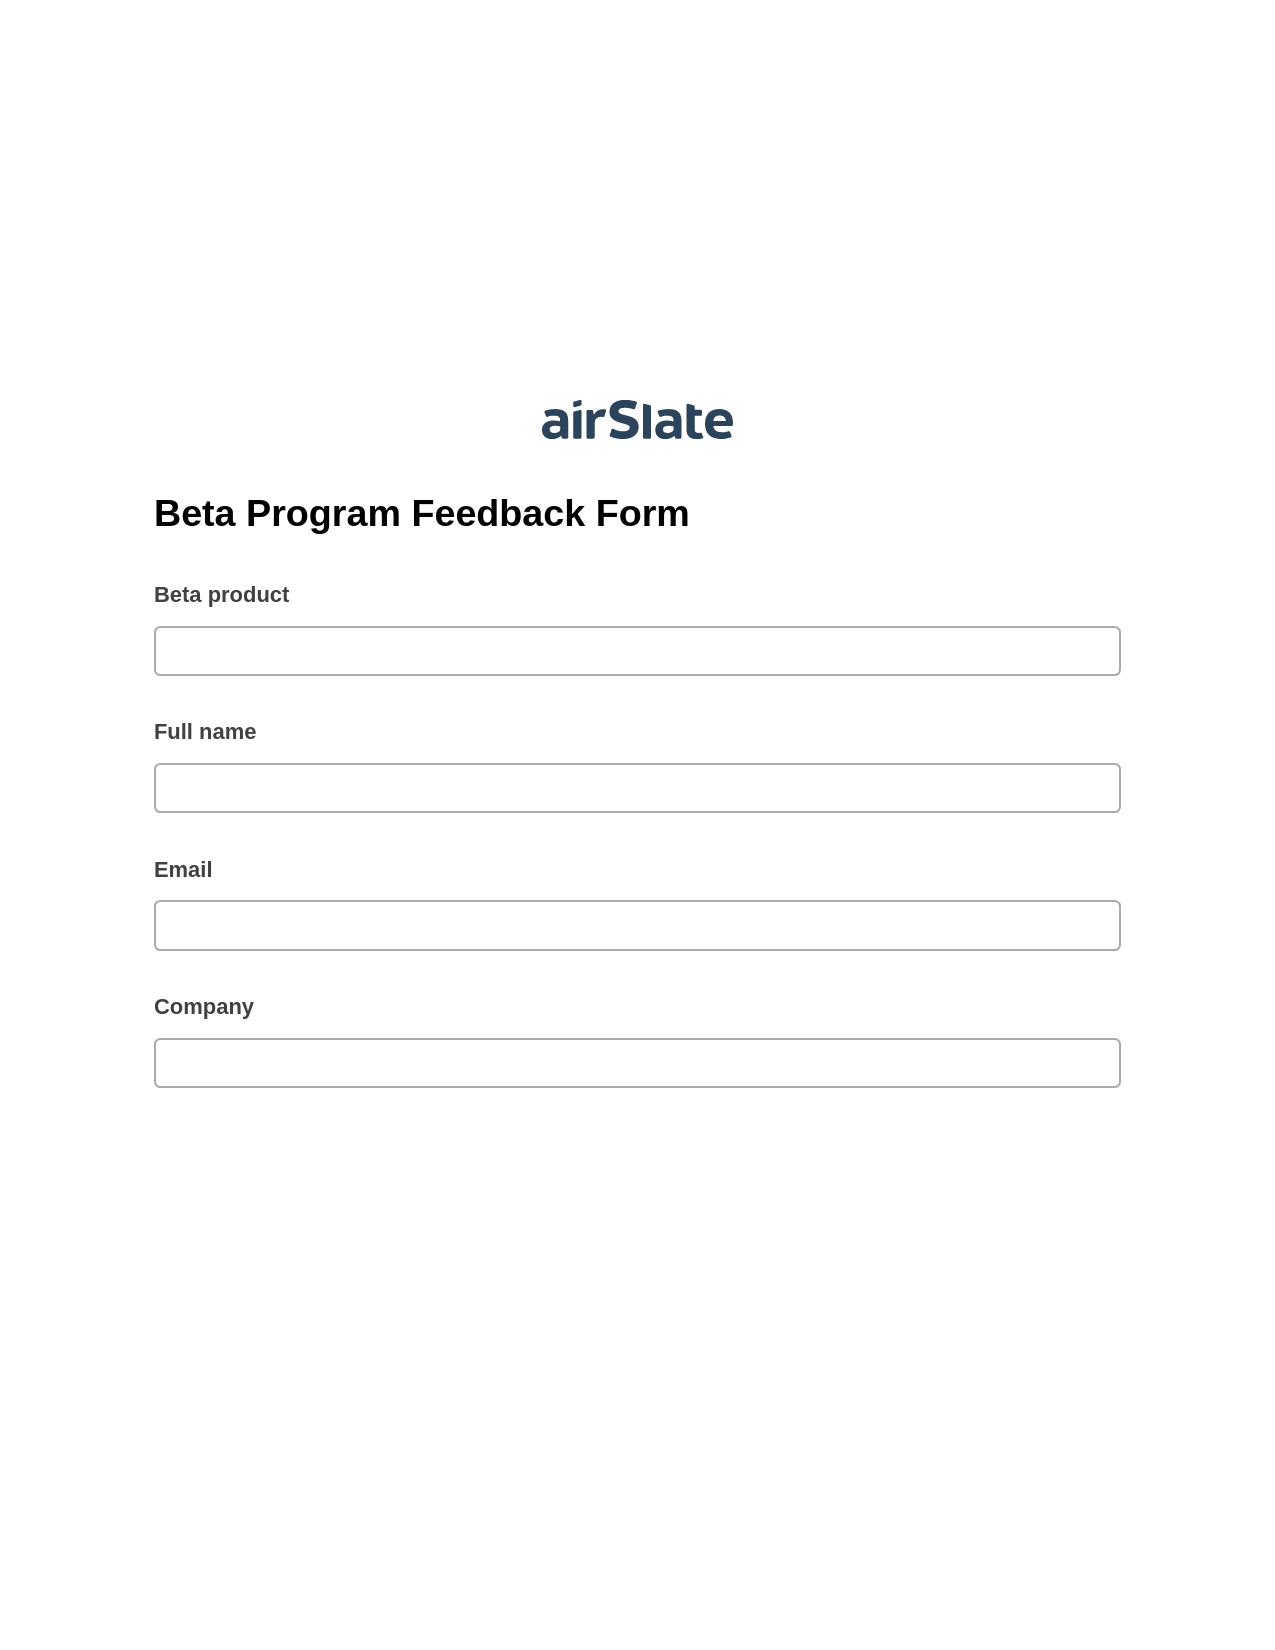 Beta Program Feedback Form Pre-fill Document Bot, Audit Trail Bot, Slack Notification Postfinish Bot